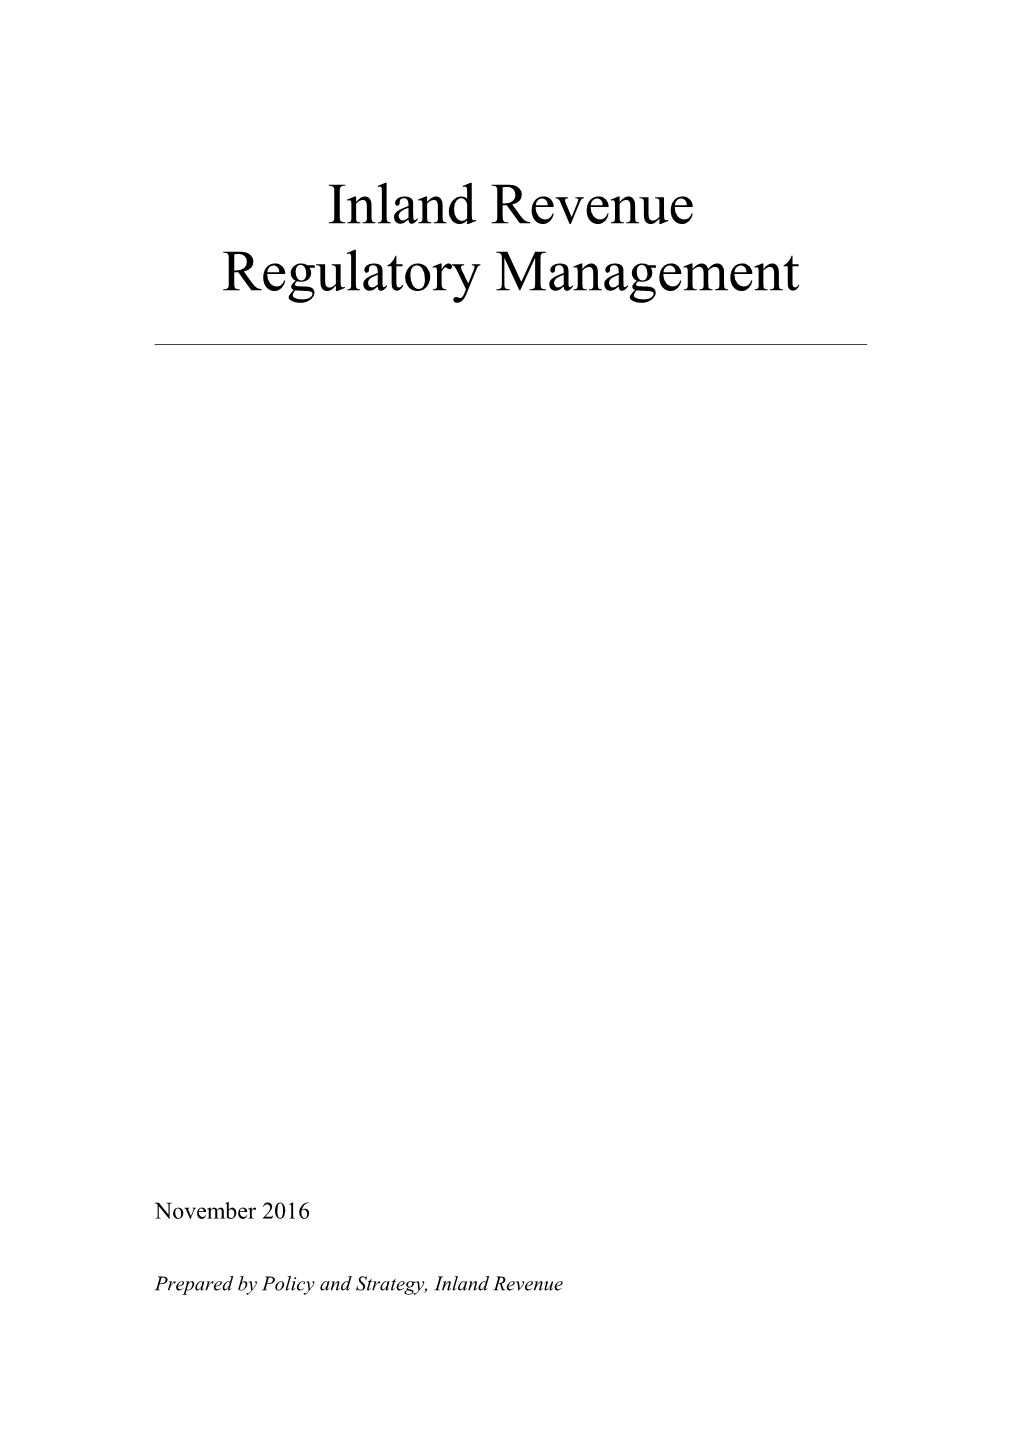 Inland Revenue Regulatory Management (November 2016)